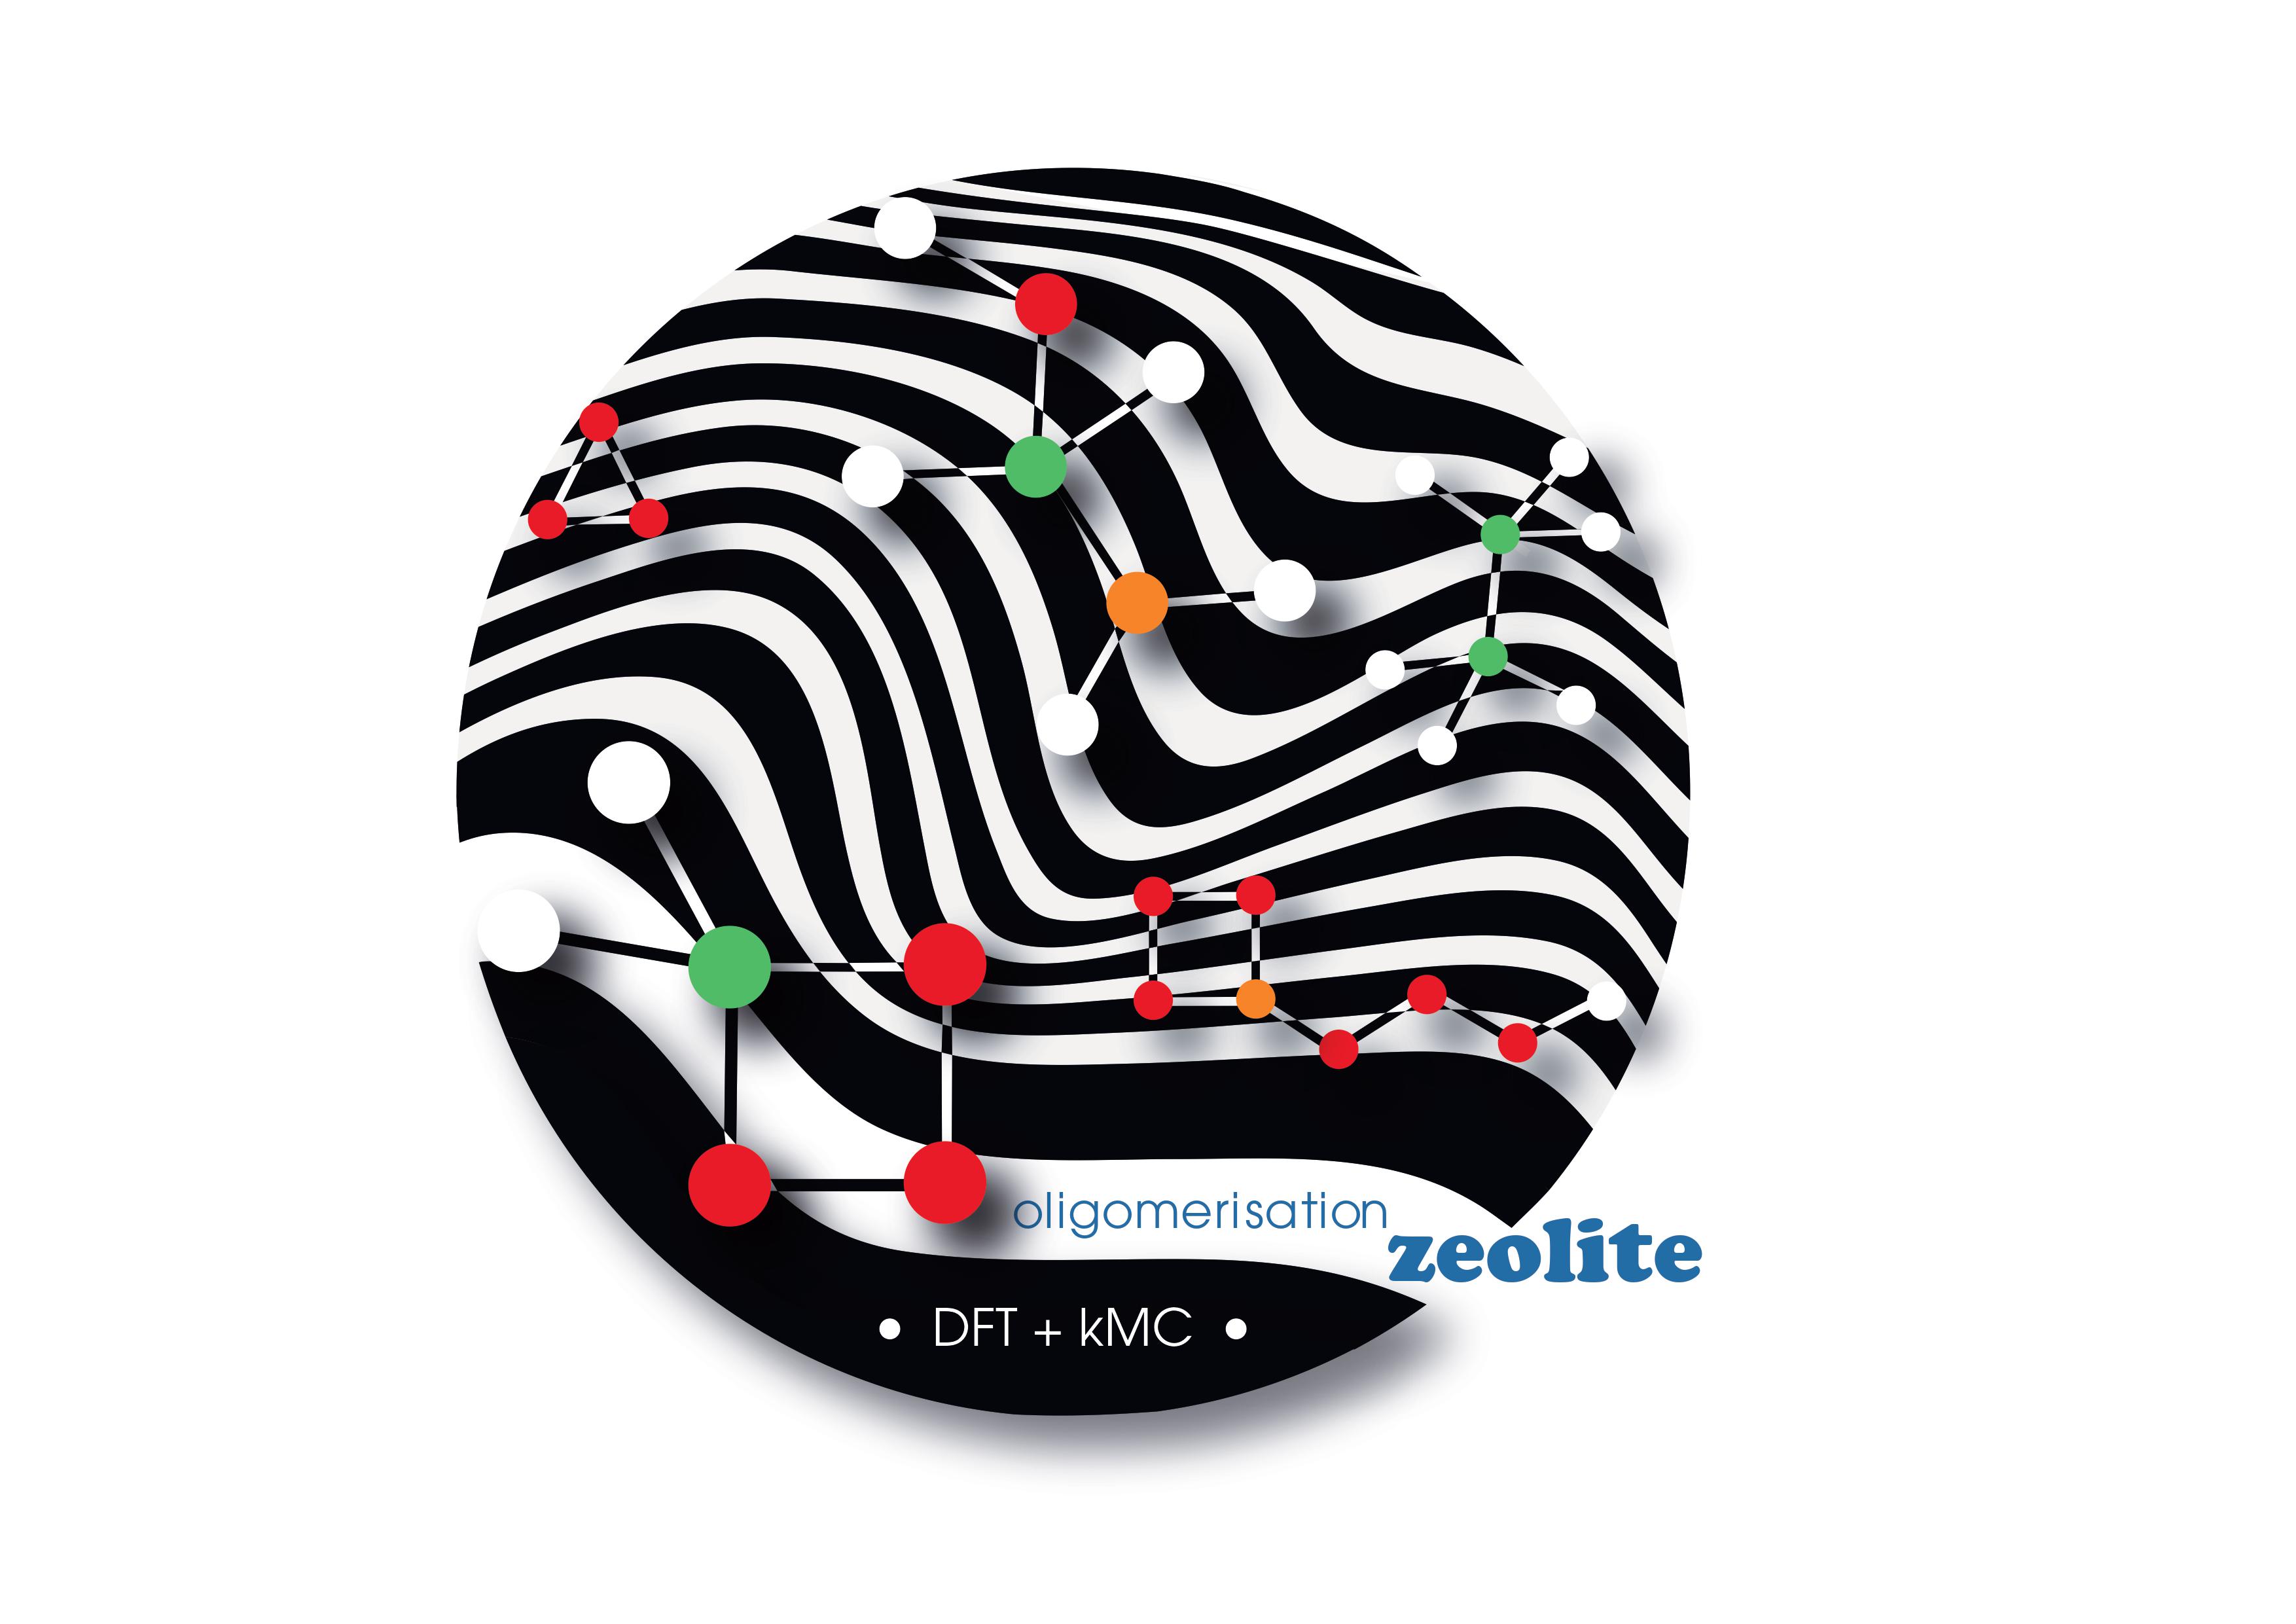 Cover - Oligomerisation zeolite